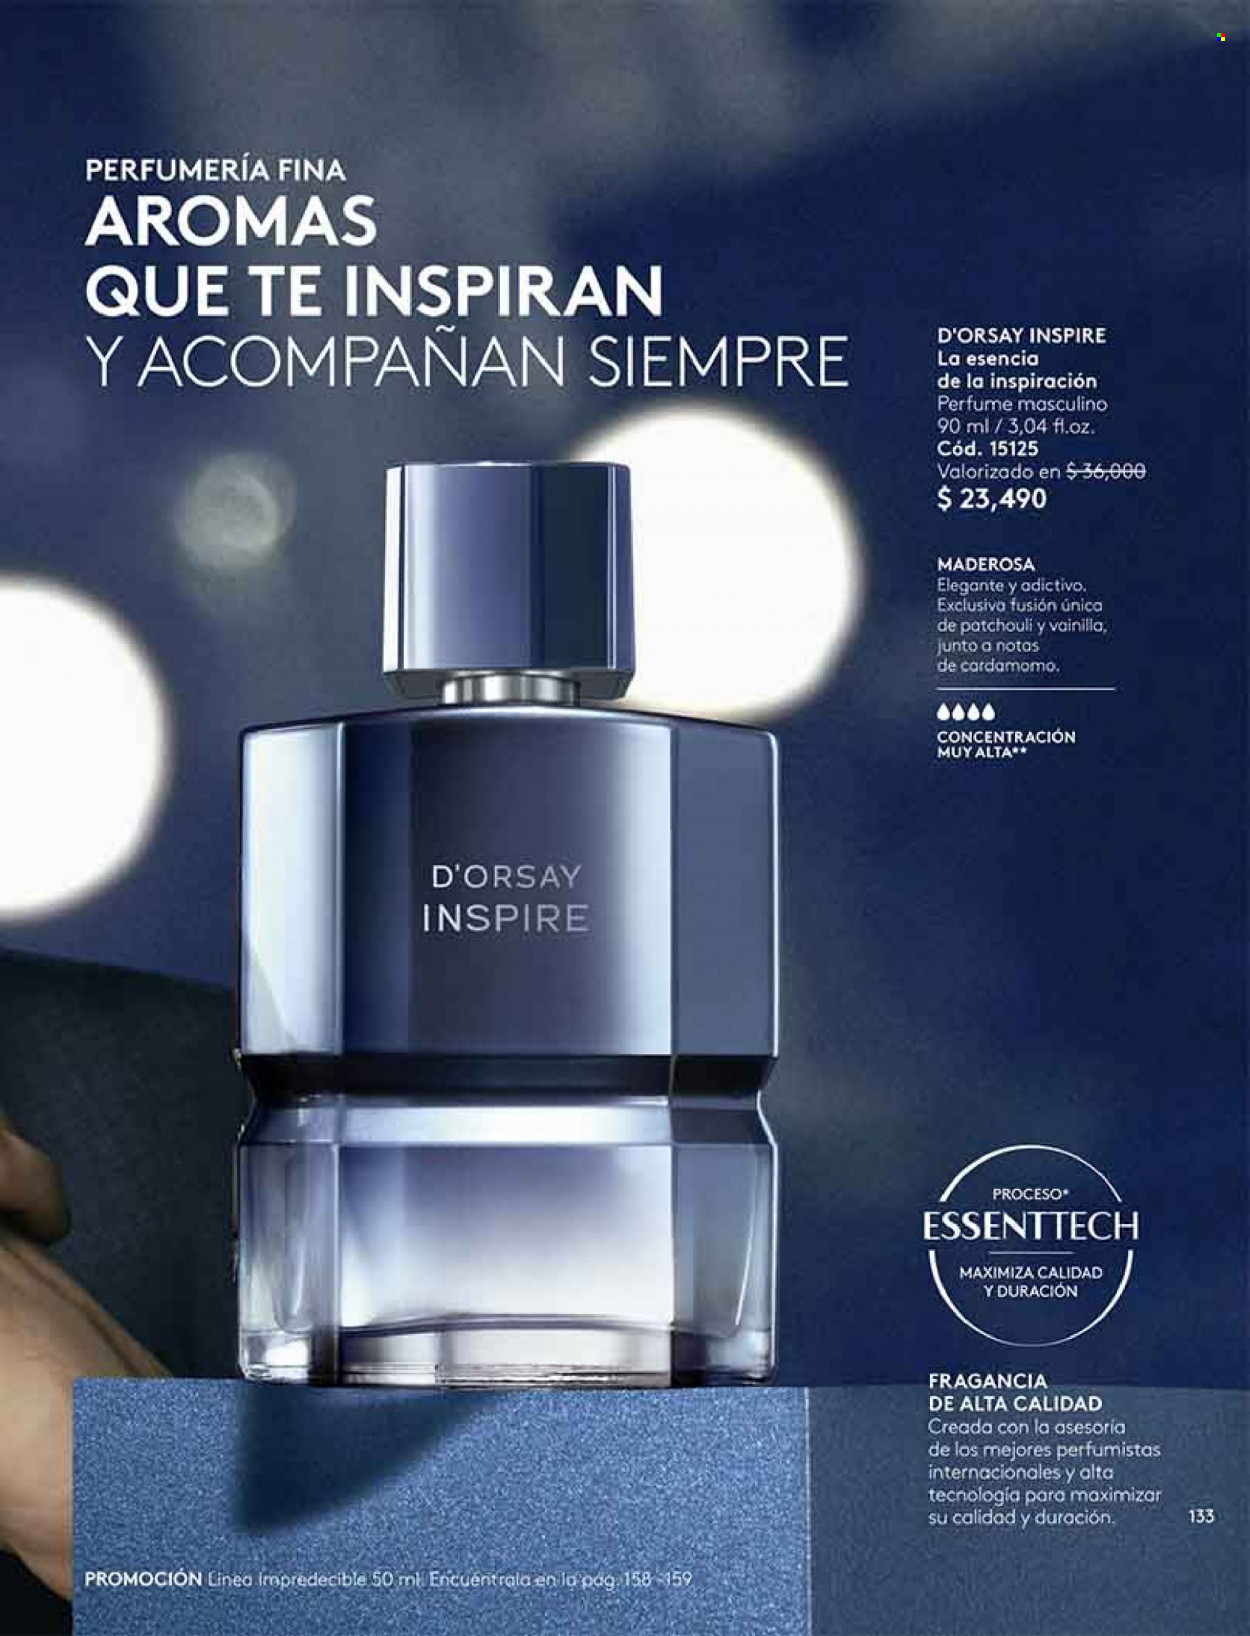 Catálogo Ésika - Ventas - perfume. Página 133.